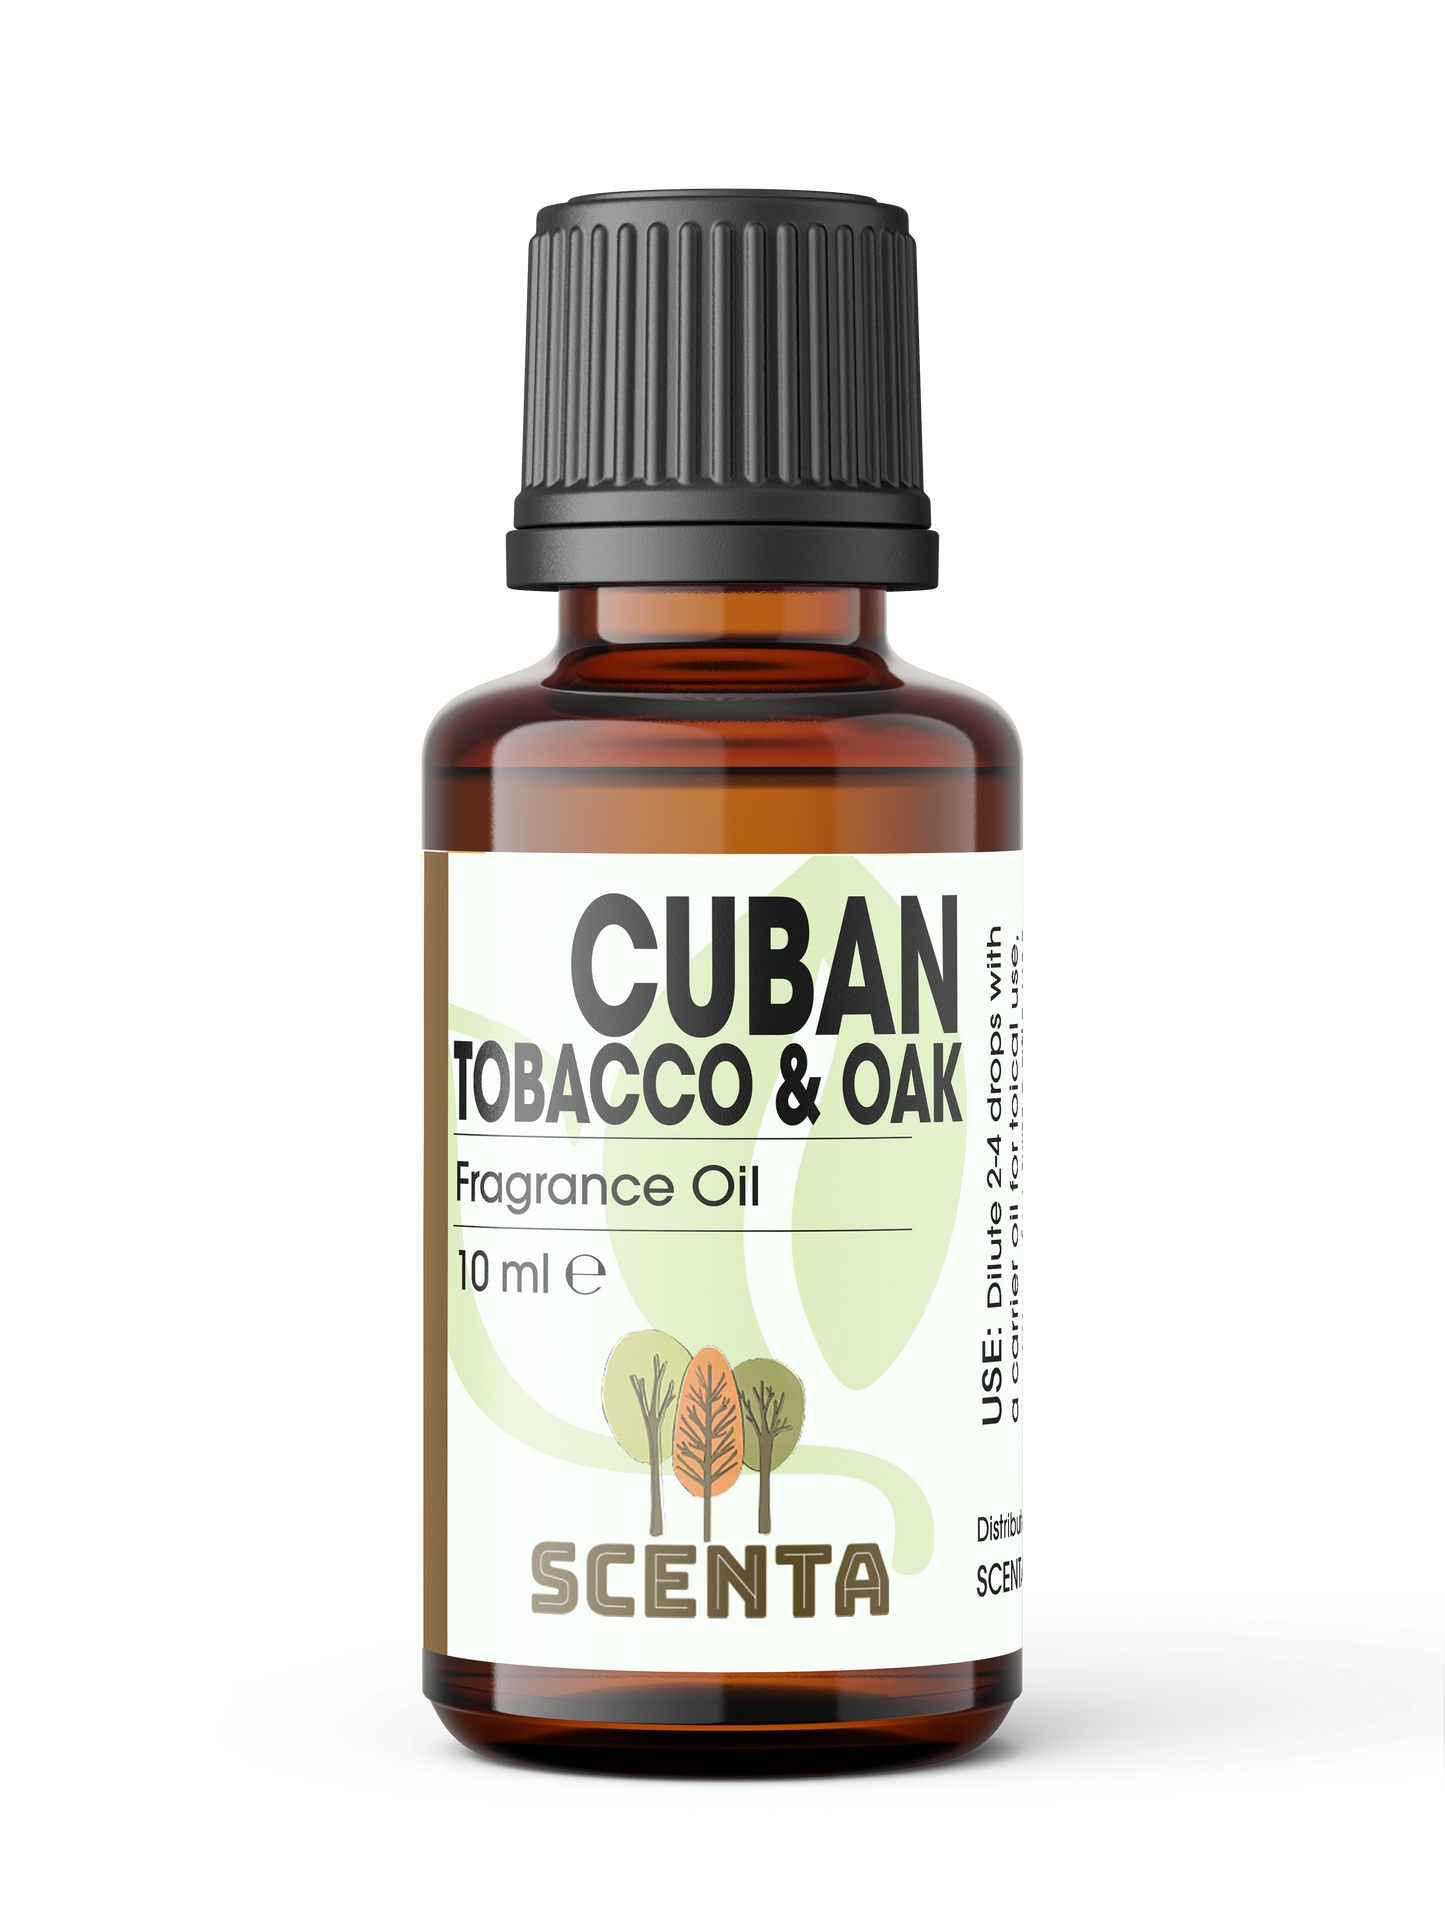 Cuban Tobacco & Oak Fragrance Oil 10ml